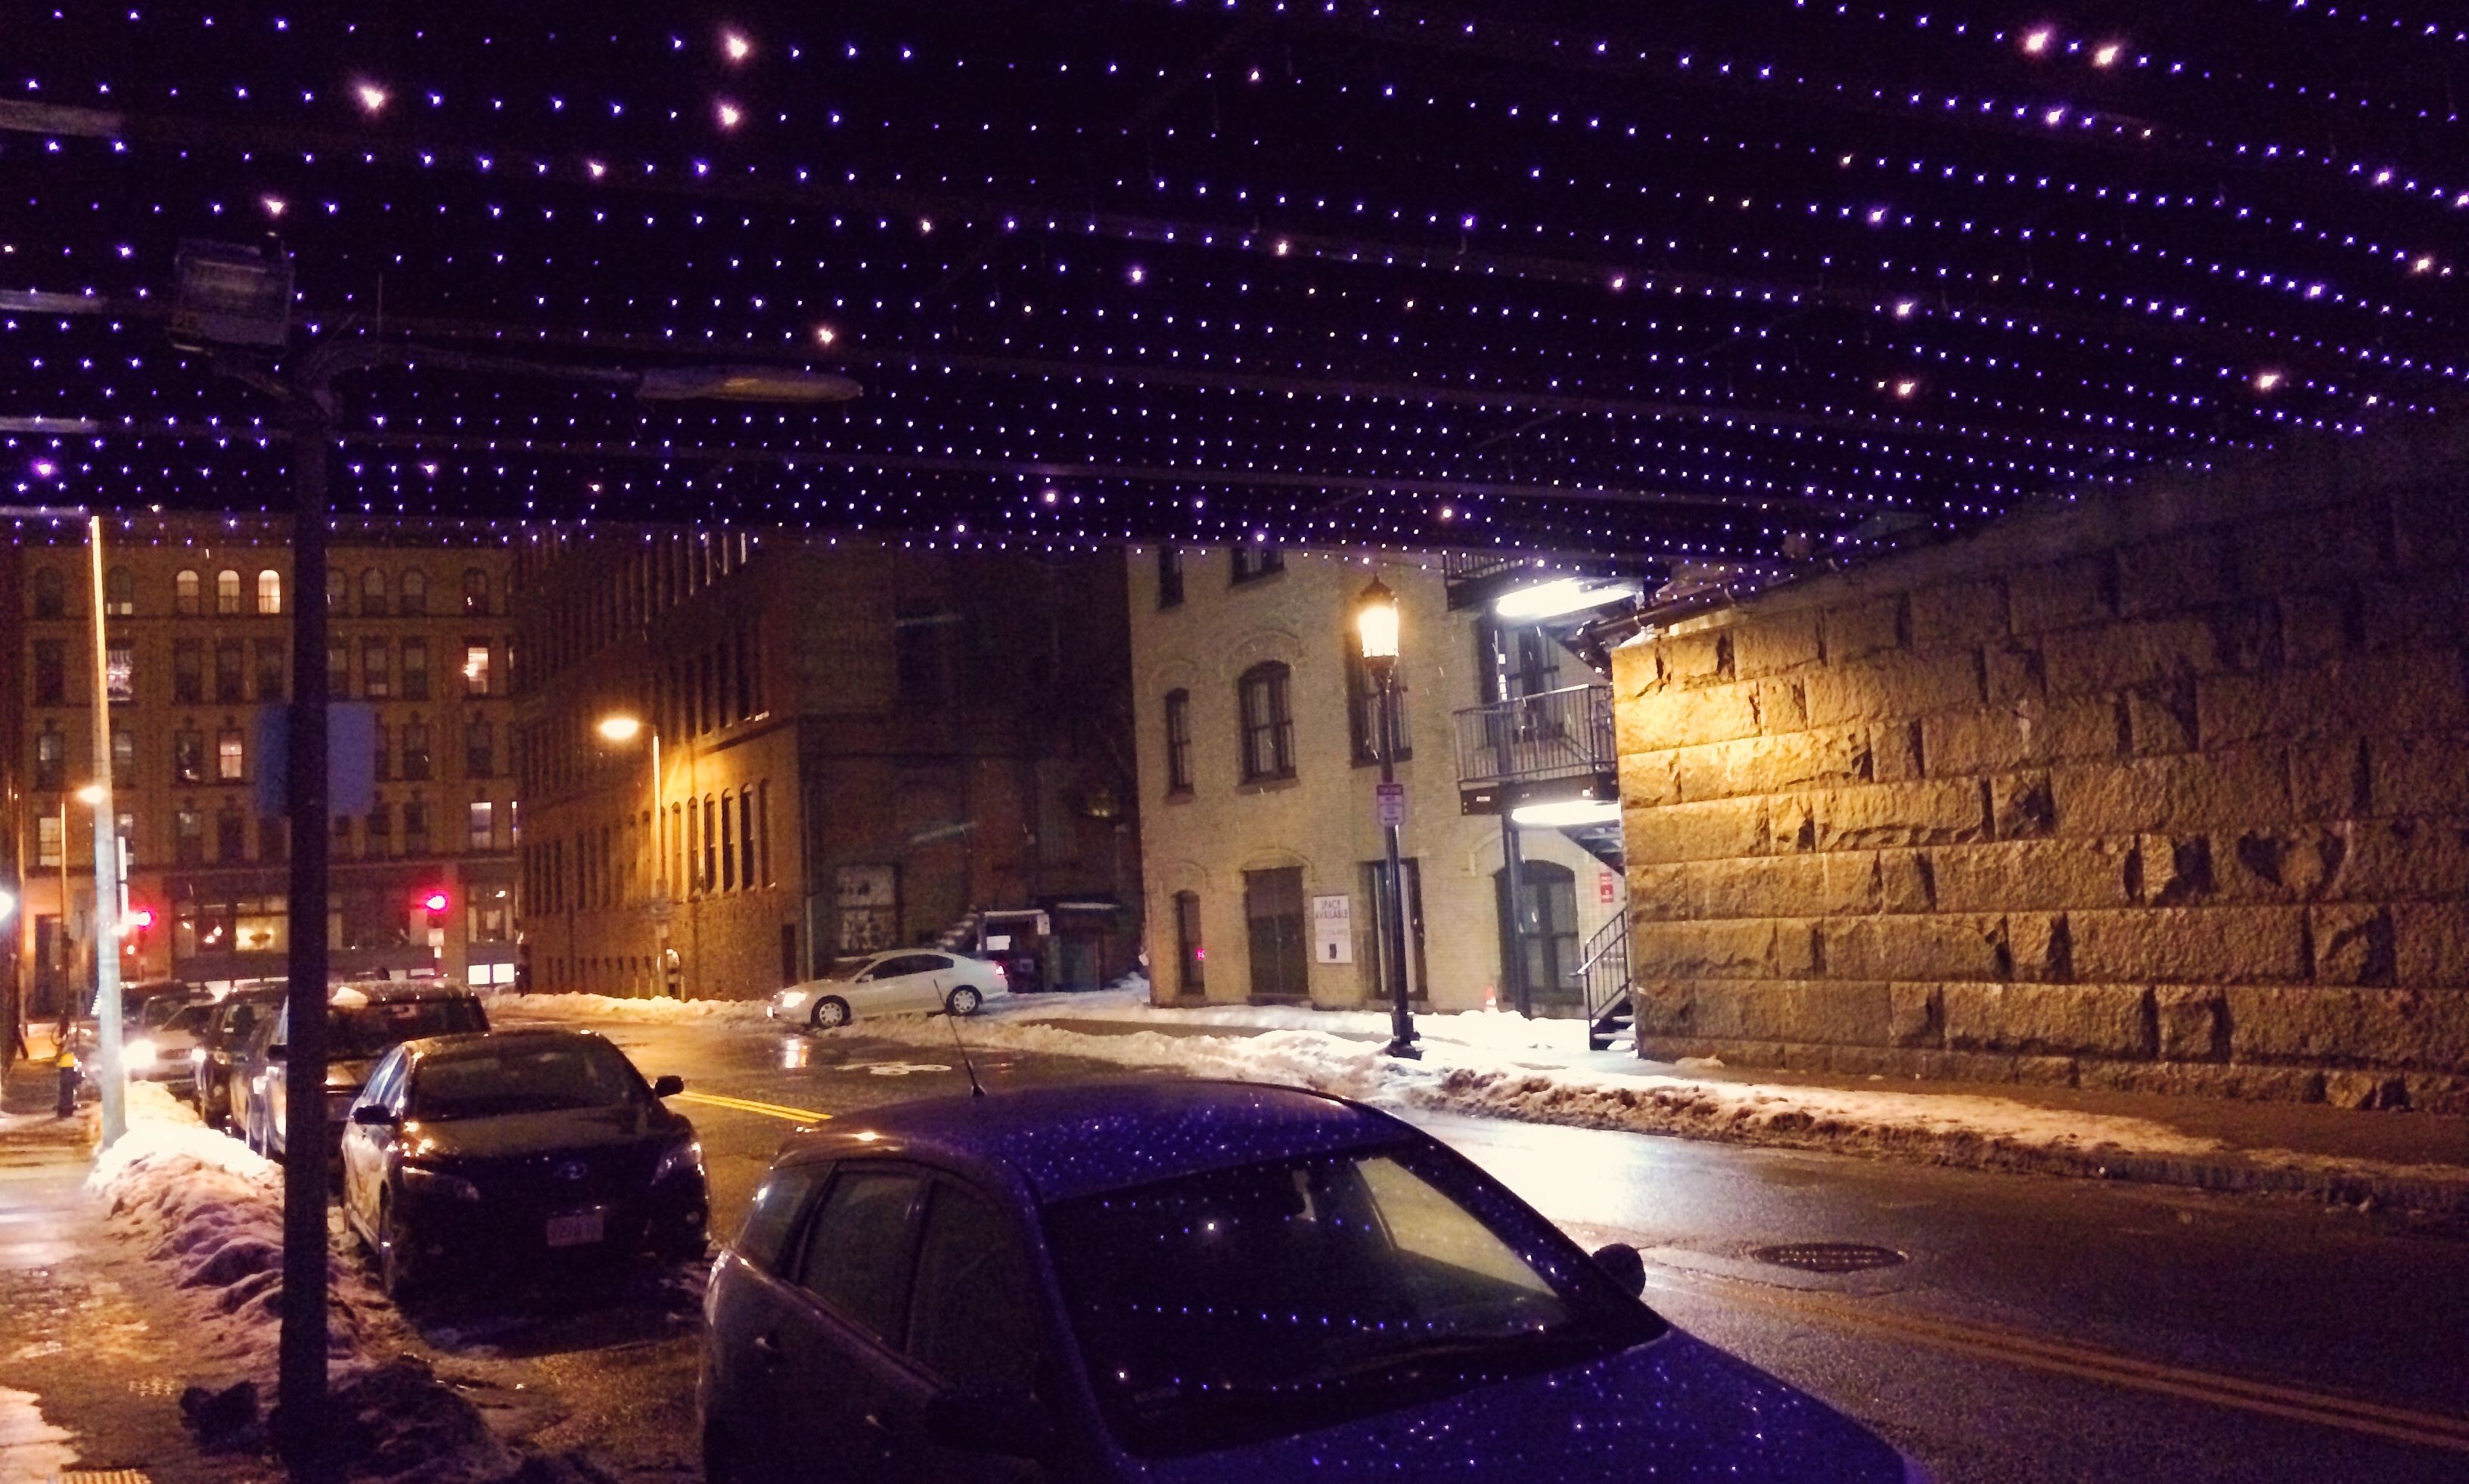 Seaport District in winter - purple holiday lights twinkling like stars below the underpass